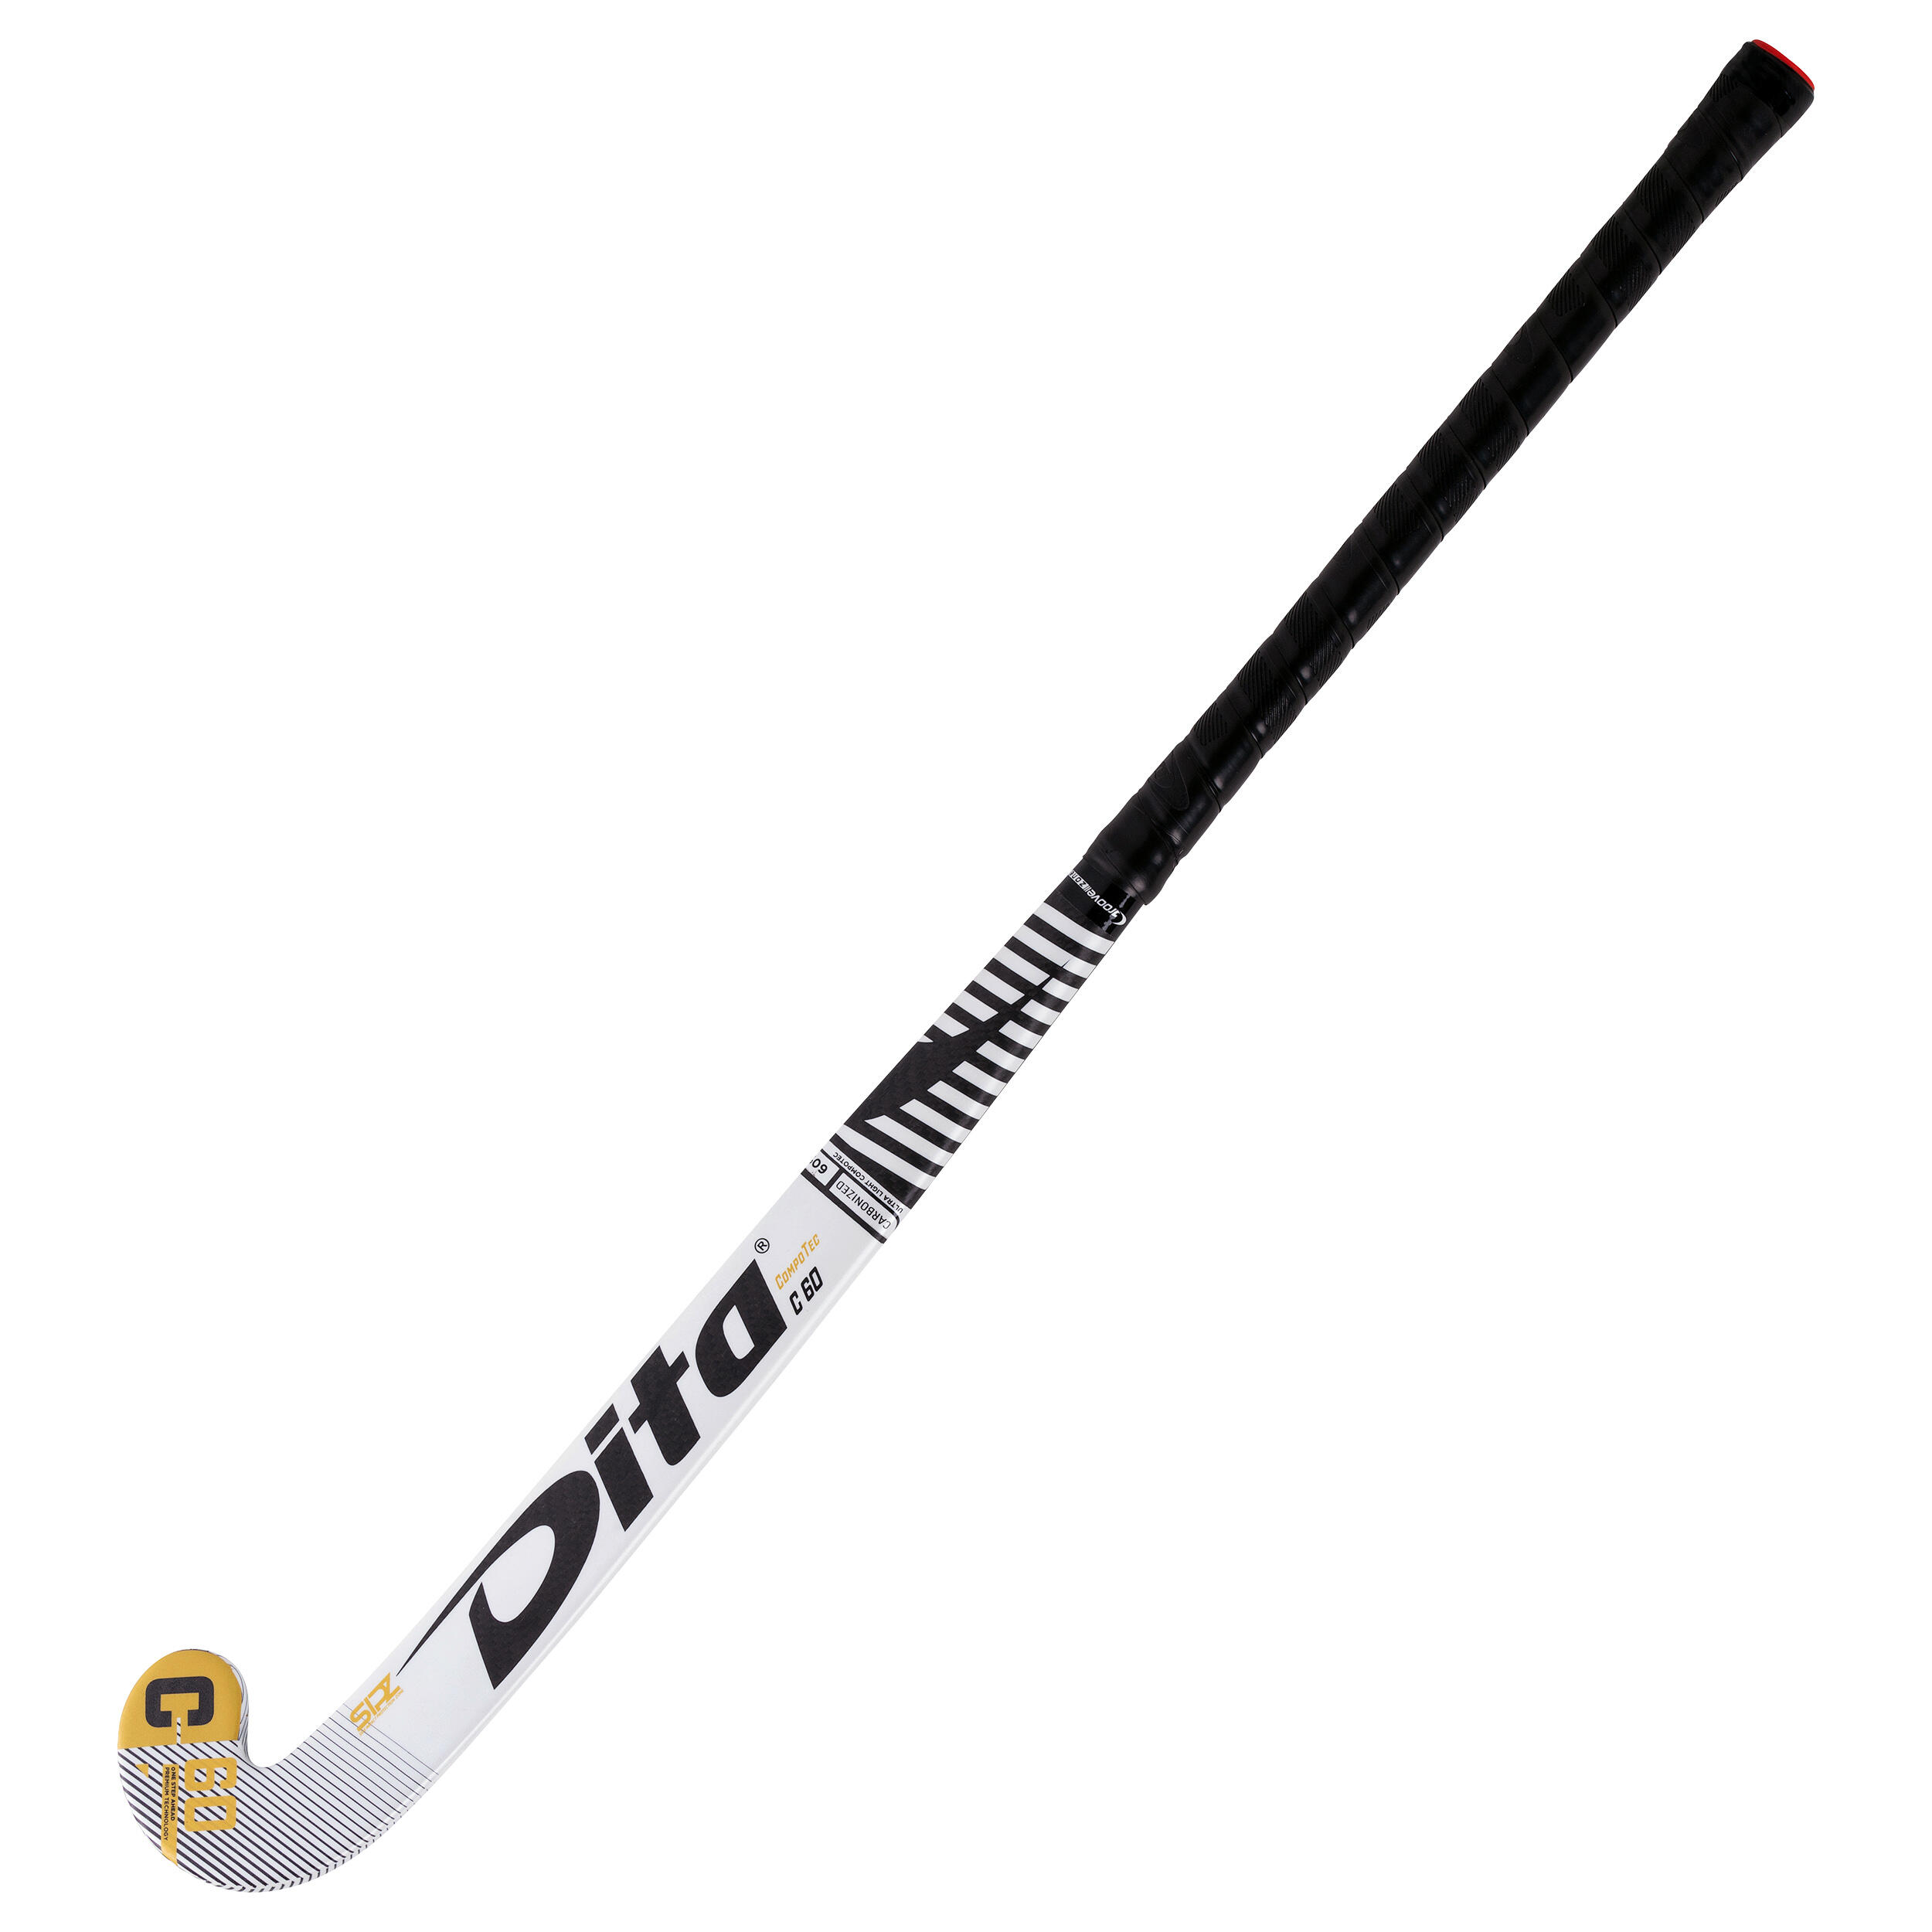 Adult Intermediate 60% Carbon Mid Bow Field Hockey Stick CompotecC60 - White/Black 4/12